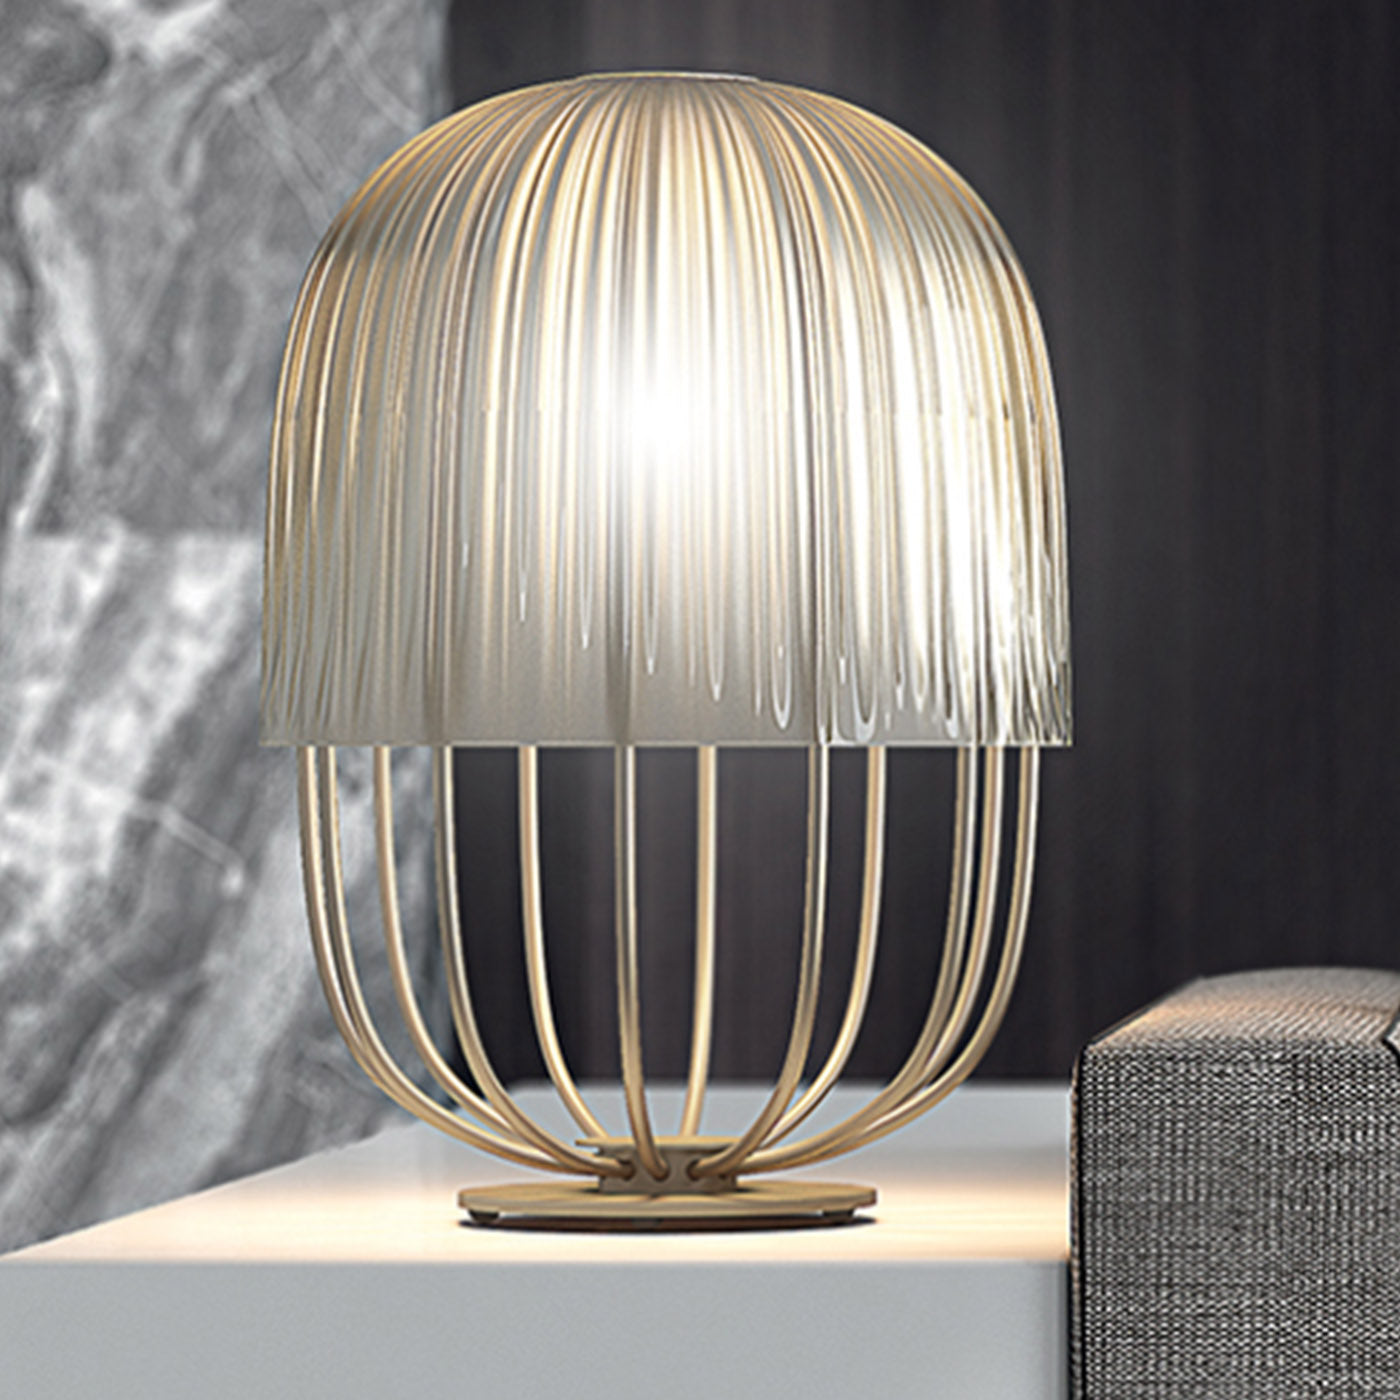 Medusa Table Lamp by MAM Design - Alternative view 1